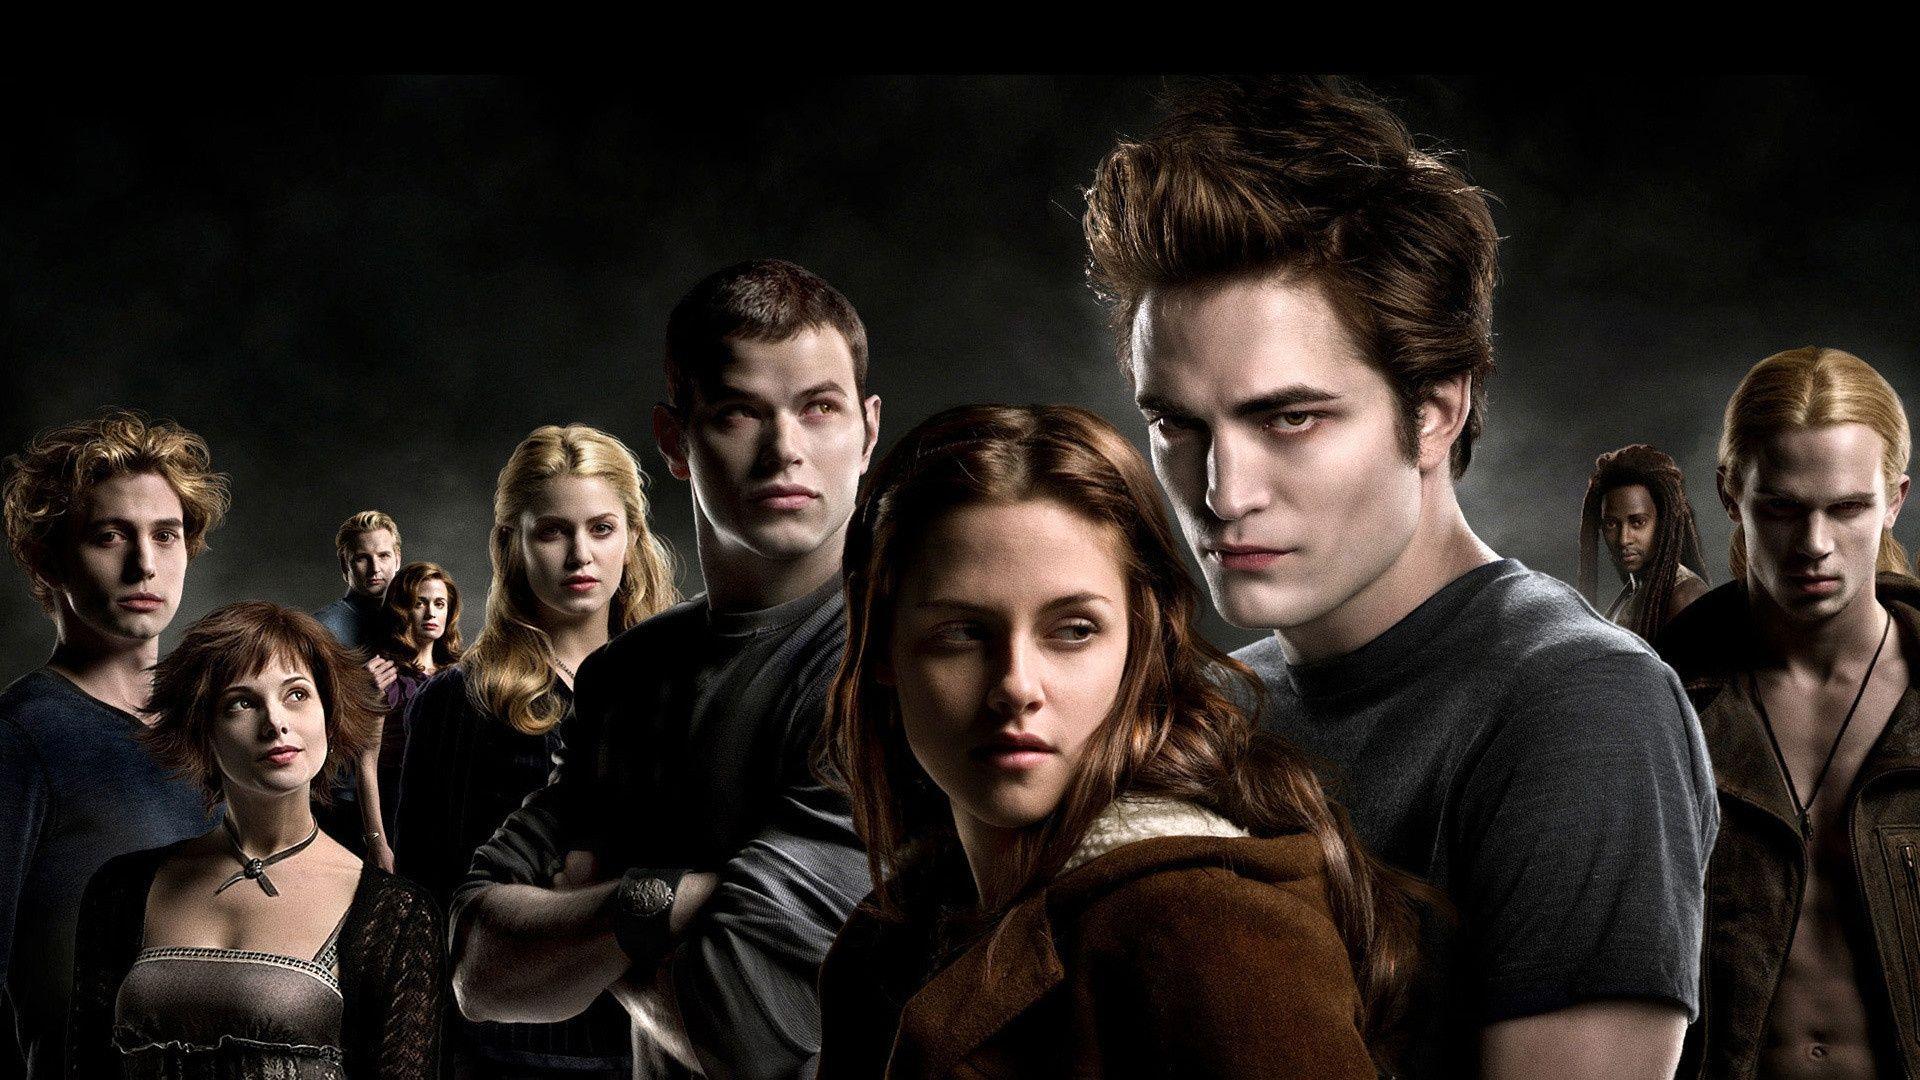 The Twilight Saga Wallpaper in jpg format for free download